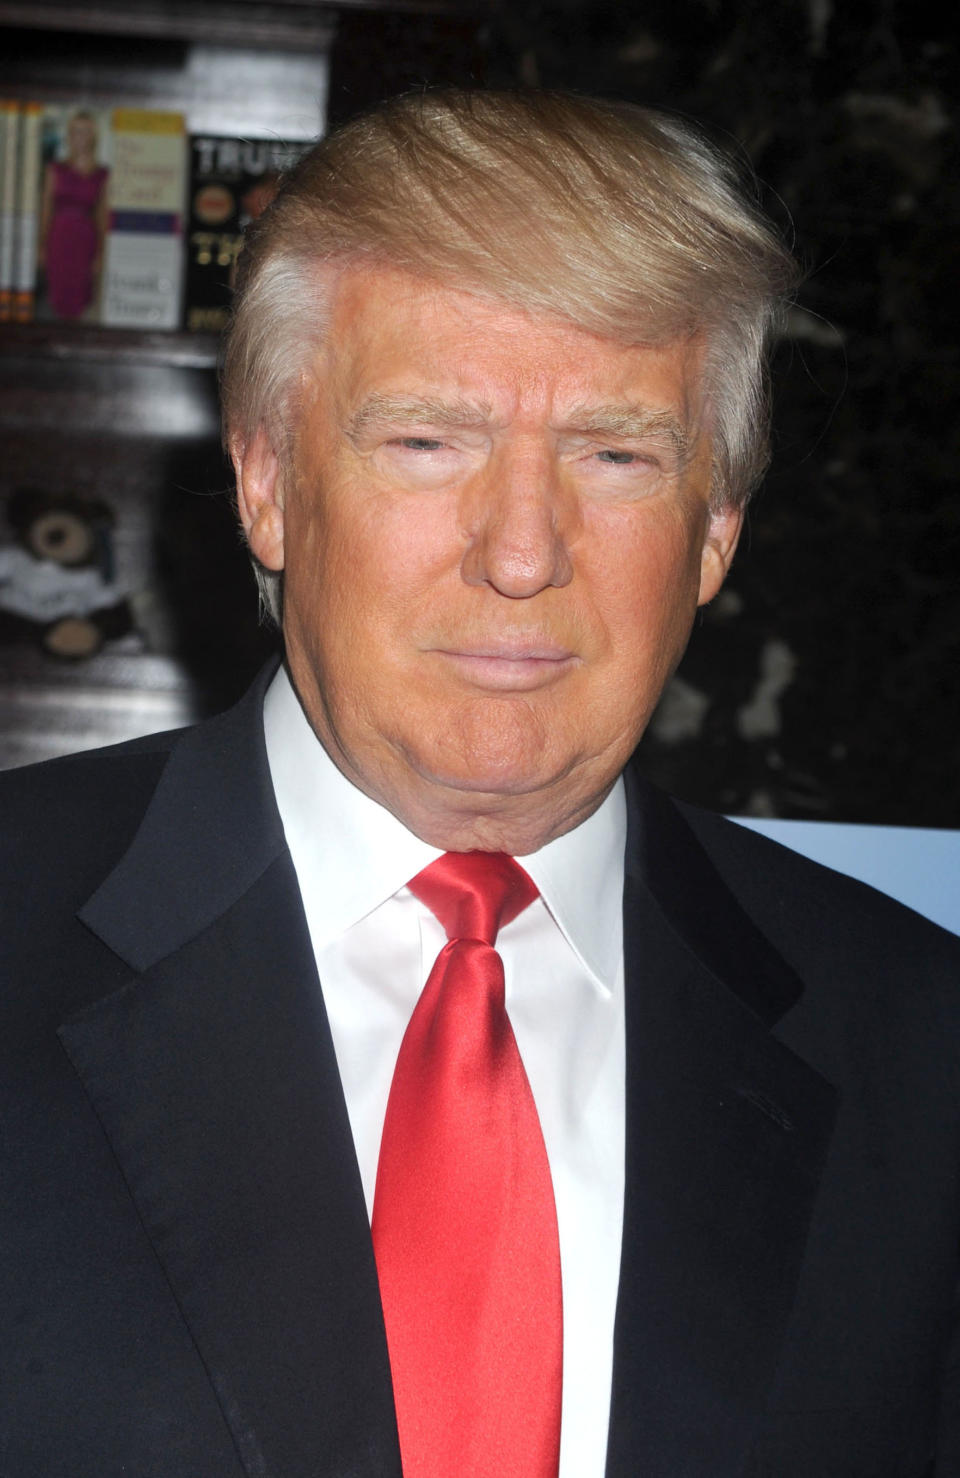 Donald Trump en un evento de "Celebrity Apprentice", abril 2013.